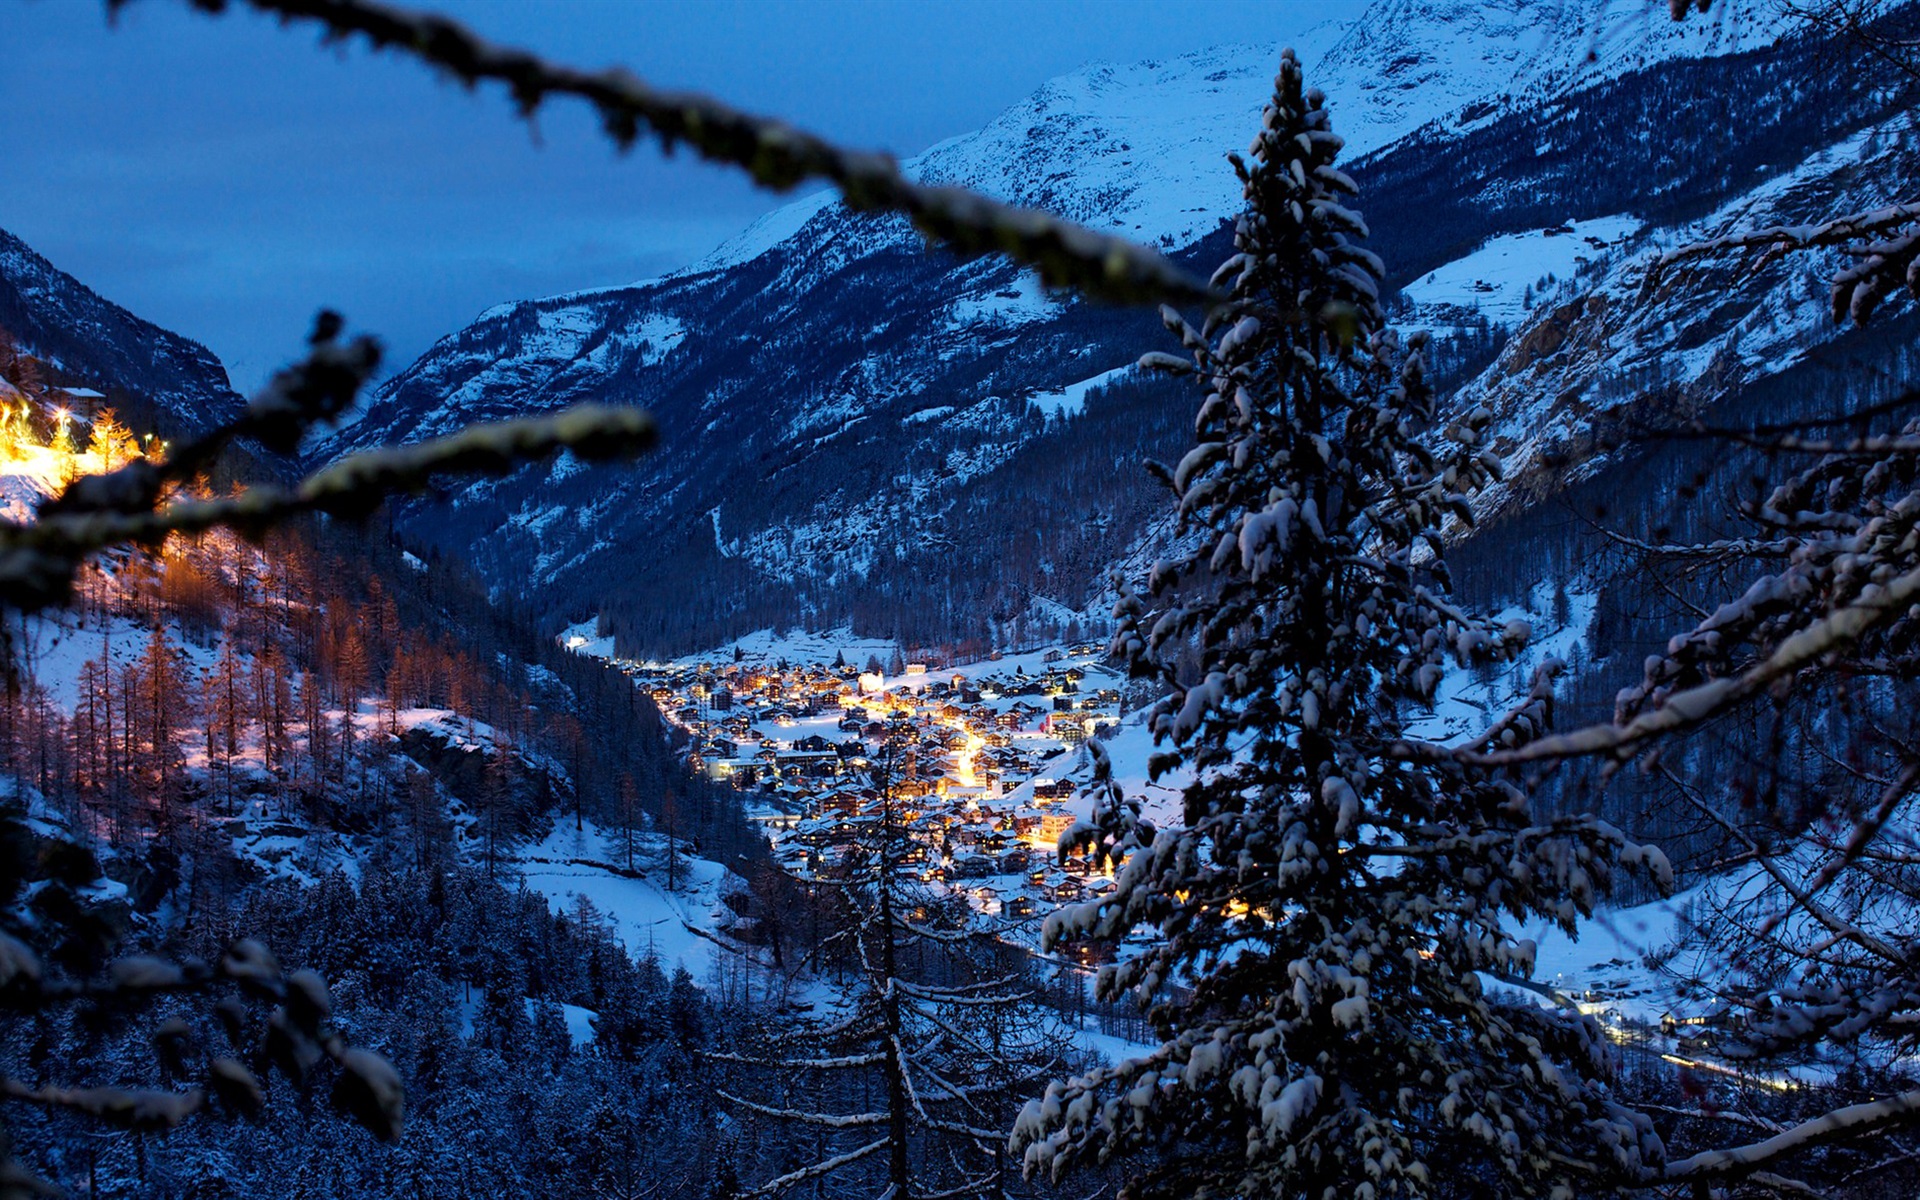 Switzerland, Alps, mountains, winter, snow, night, trees, houses